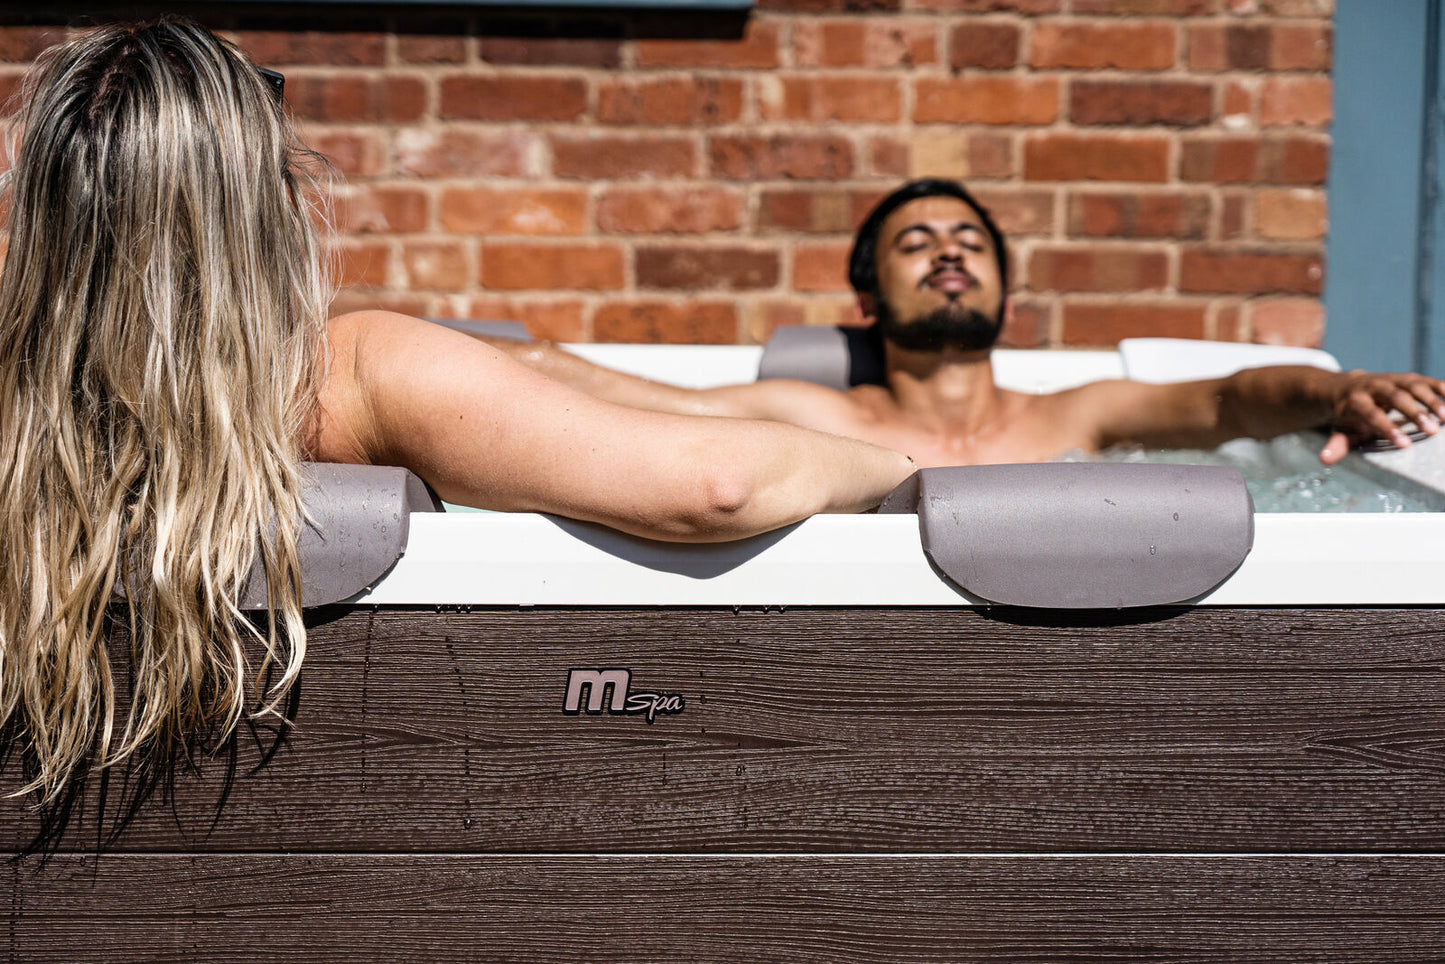 Mspa - Tribeca 4-6 Man Hot Tub - Beyond outdoor living